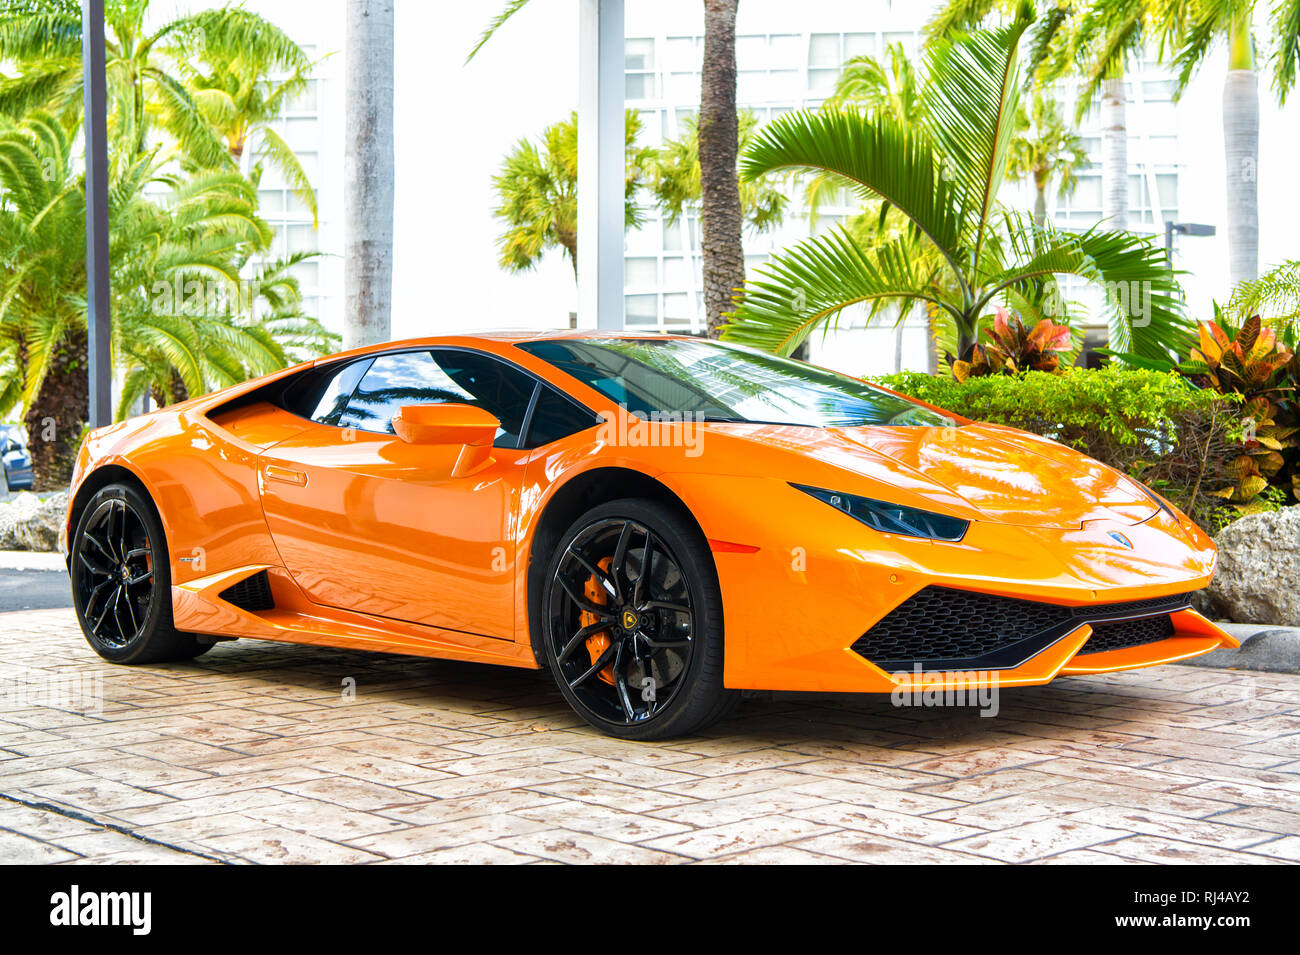 Miami, Florida, . Febrero 19, 2016: Supercar Lamborghini Aventador de color  naranja aparcado junto a Ocean Drive en South bech en Miami, Florida.  Lamborghini es famoso caro Automóvil automóvil de la marca